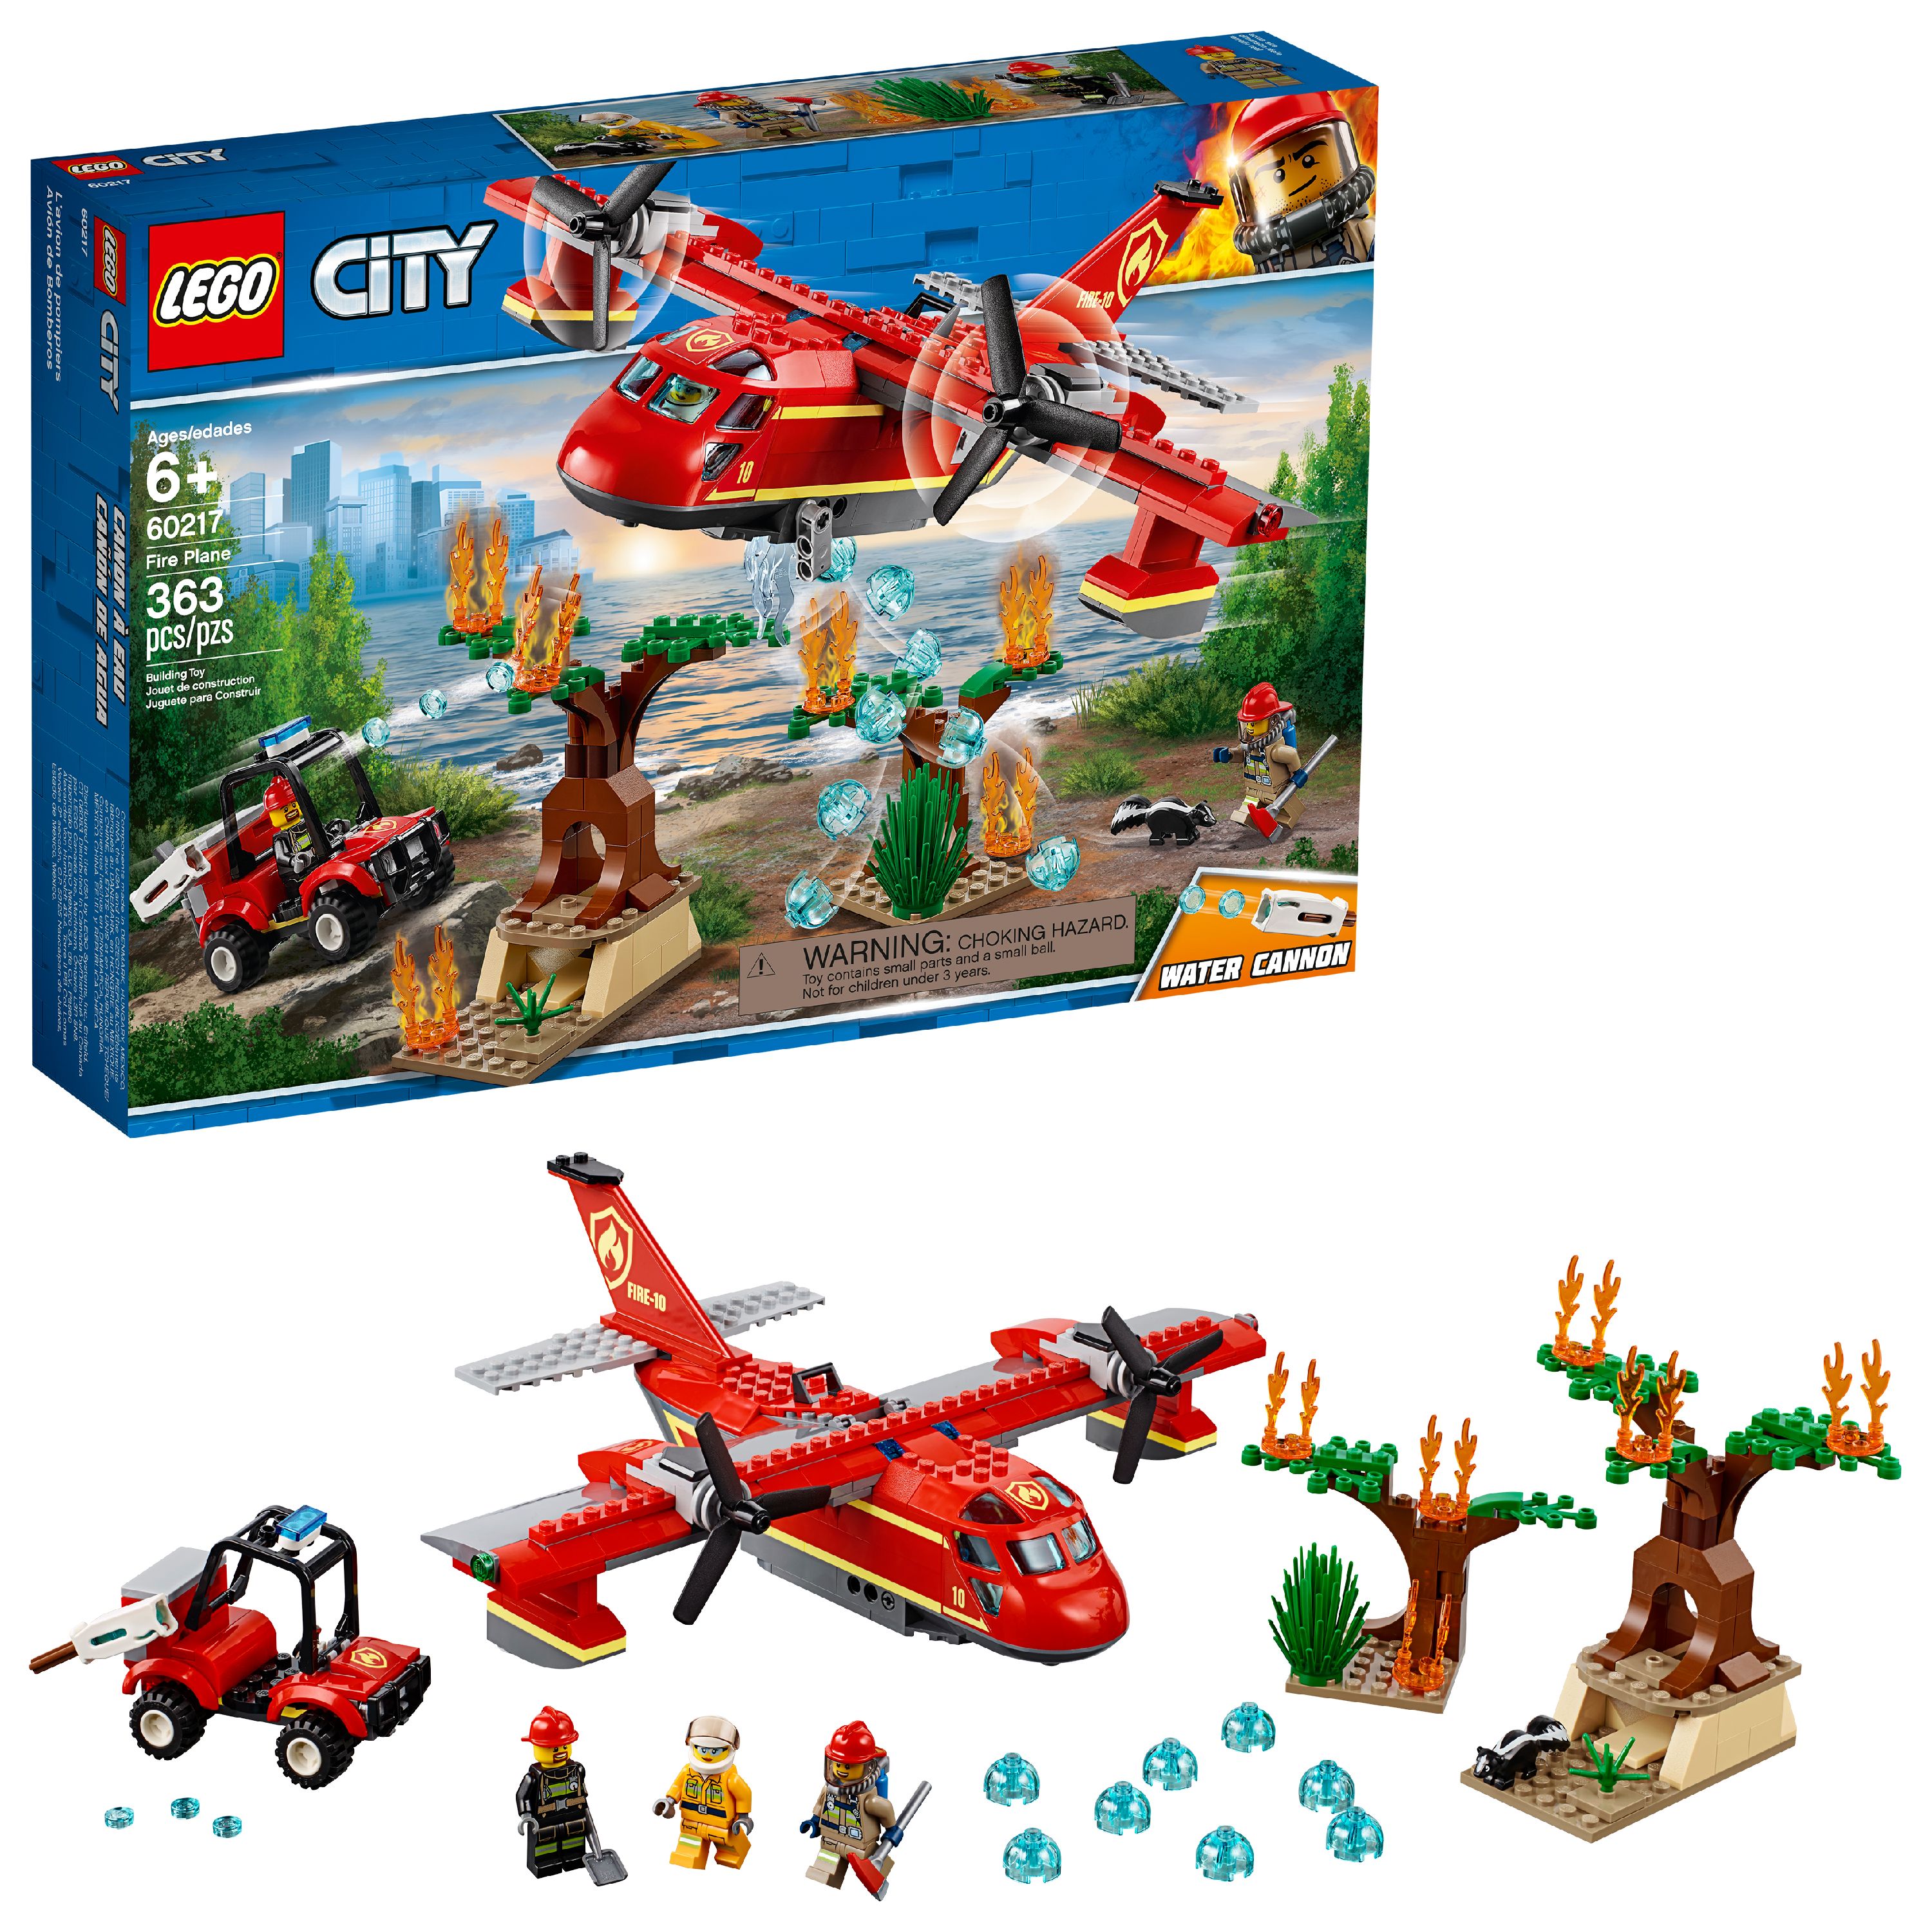 LEGO City Fire Plane 60217 Rescue Plane Building Set - image 1 of 8